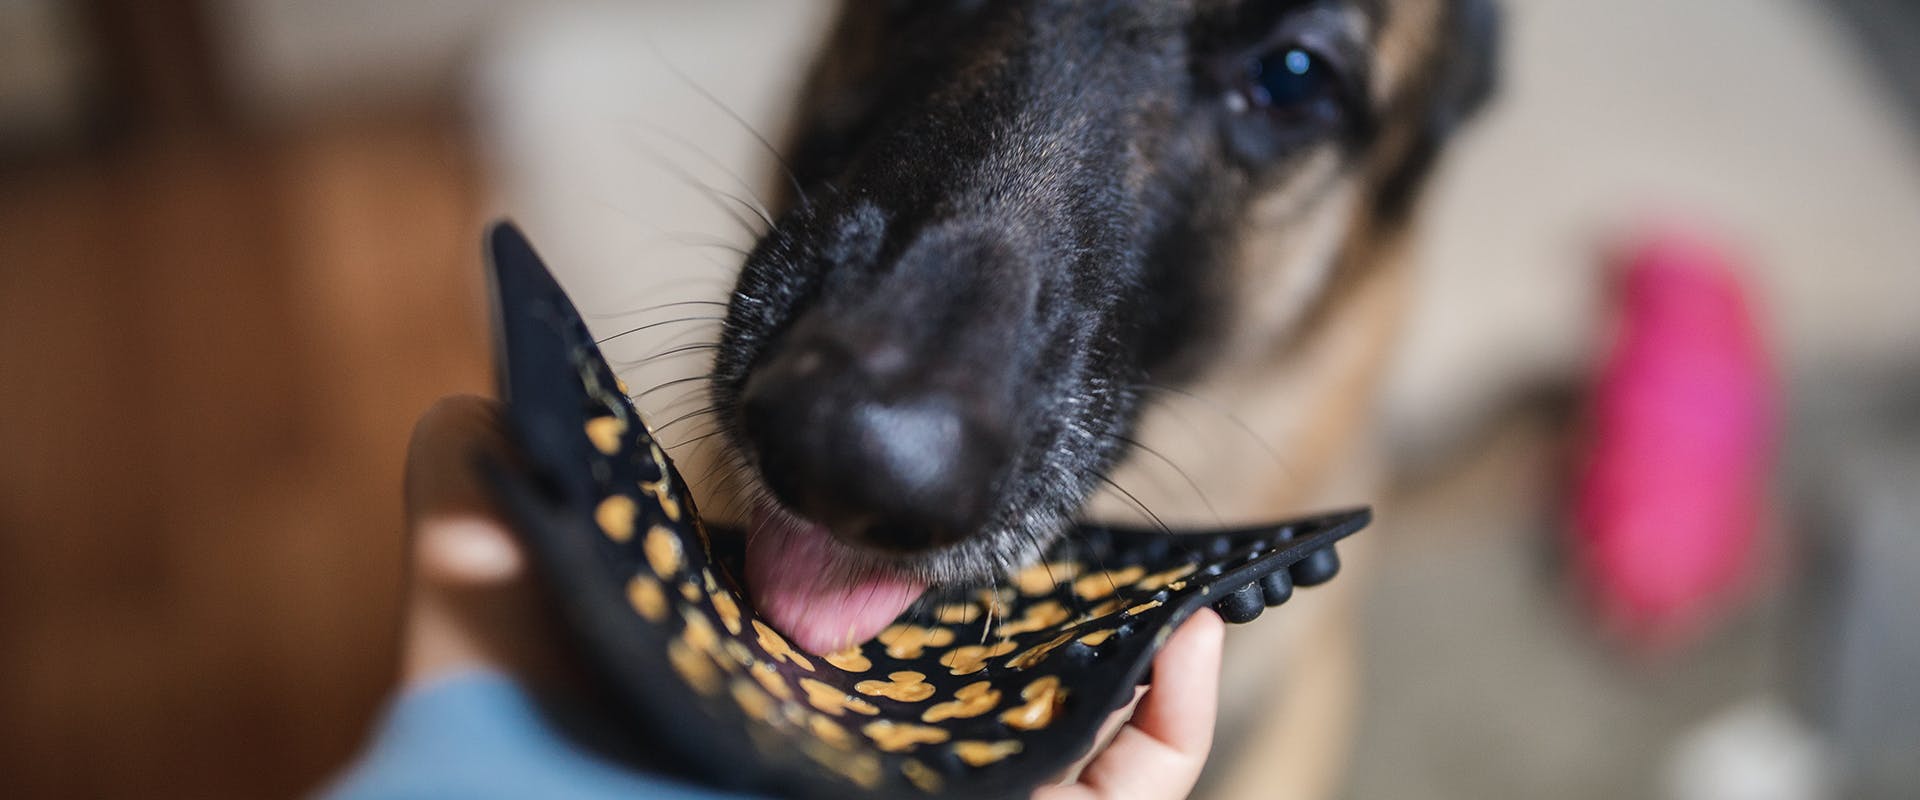 A dog eating peanut butter from a lick mat